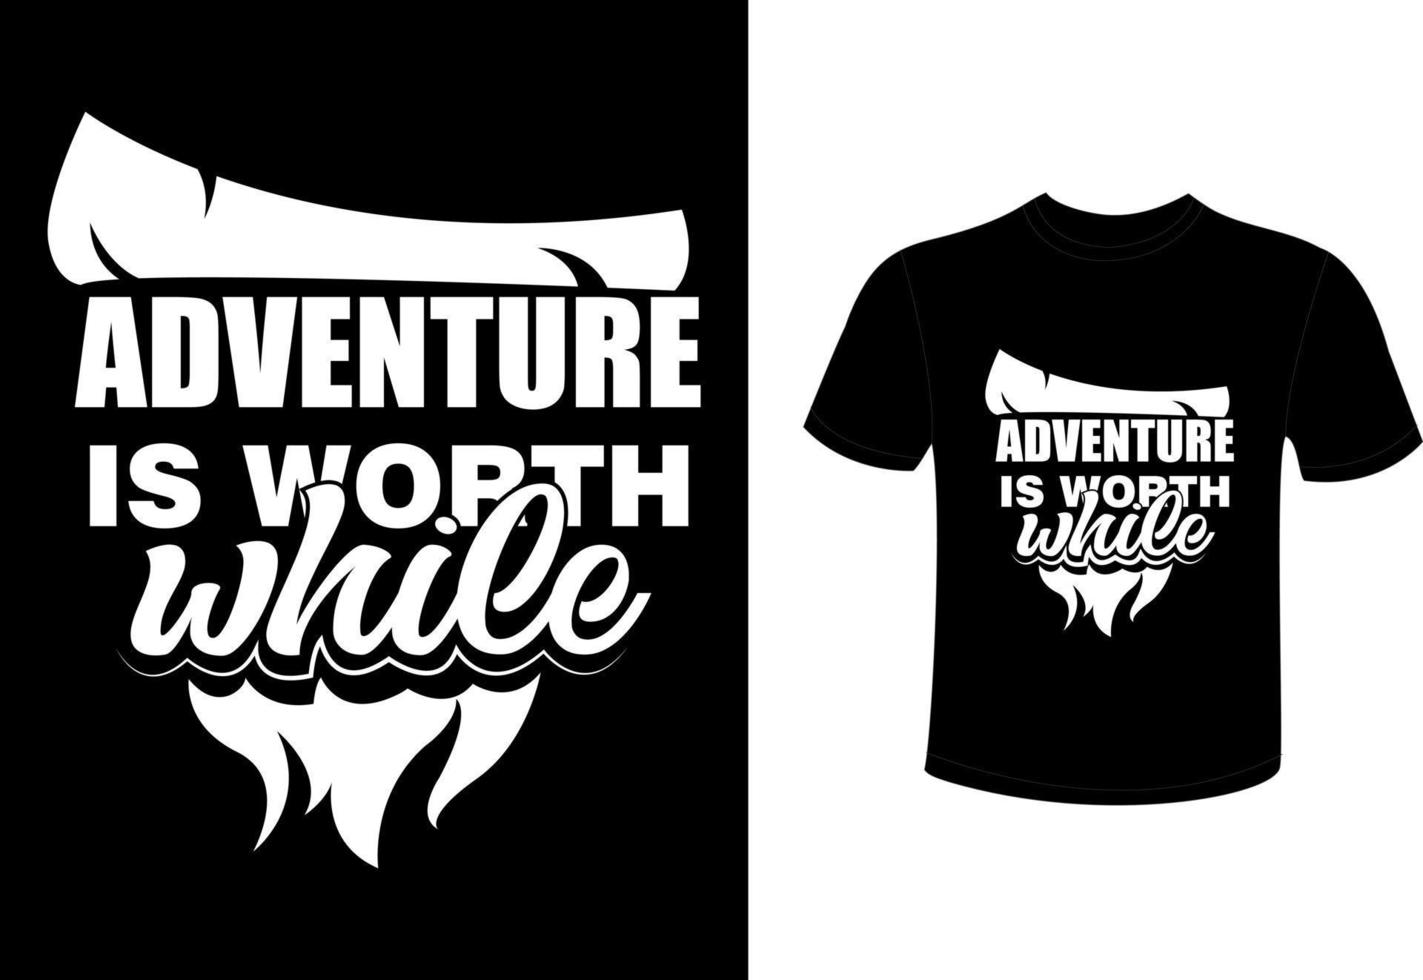 tour travel t shirt design , adventure travel t shirt design vector